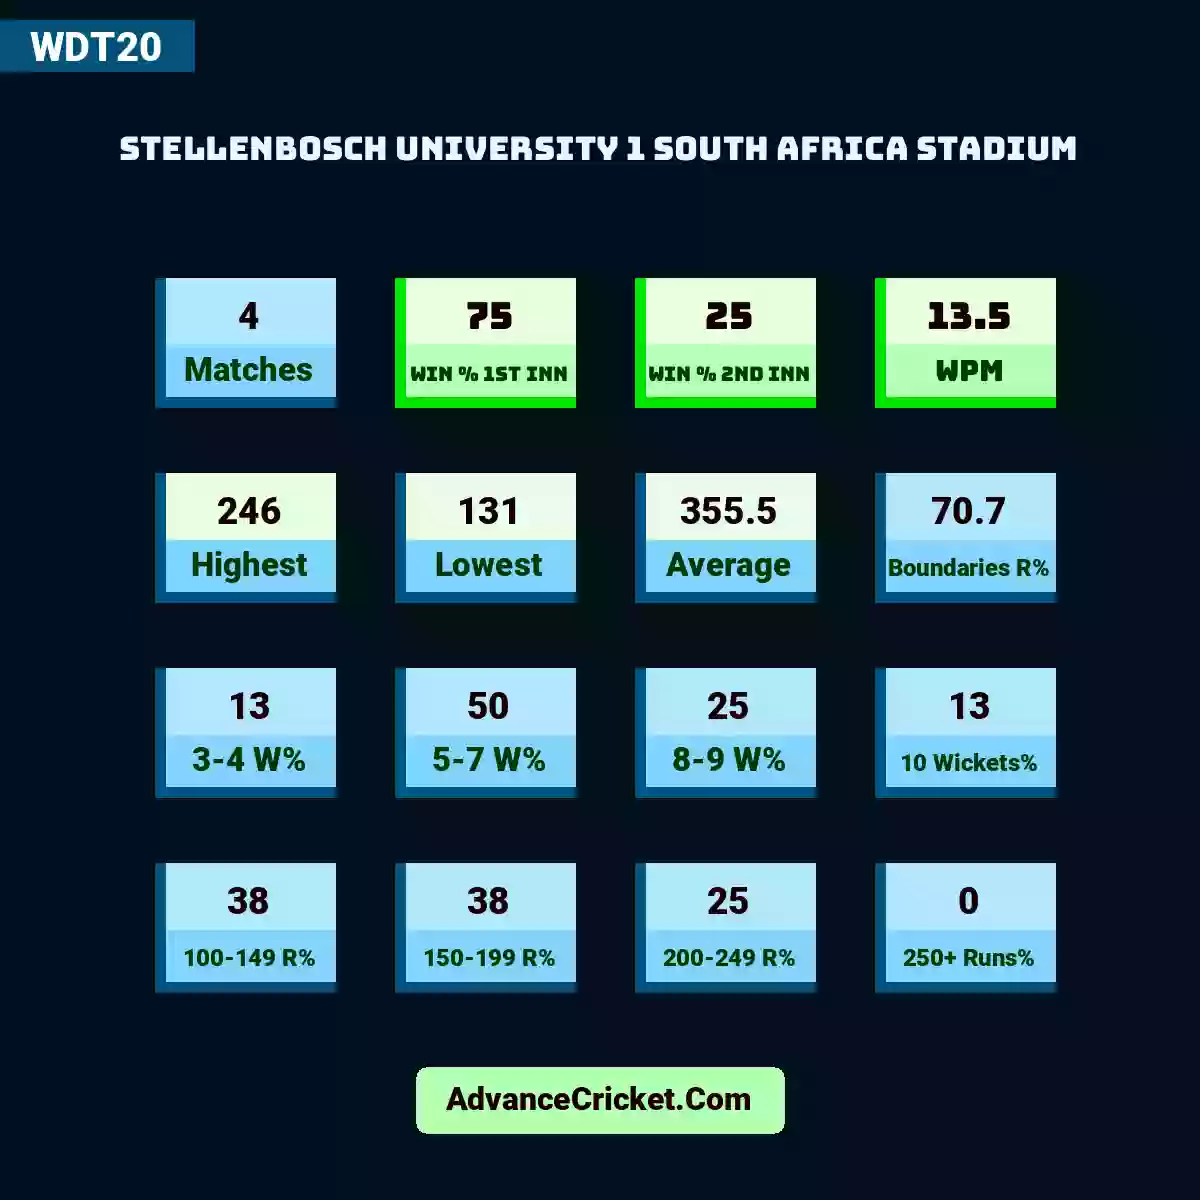 Image showing Stellenbosch University 1 South Africa Stadium with Matches: 4, Win % 1st Inn: 75, Win % 2nd Inn: 25, WPM: 13.5, Highest: 246, Lowest: 131, Average: 355.5, Boundaries R%: 70.7, 3-4 W%: 13, 5-7 W%: 50, 8-9 W%: 25, 10 Wickets%: 13, 100-149 R%: 38, 150-199 R%: 38, 200-249 R%: 25, 250+ Run